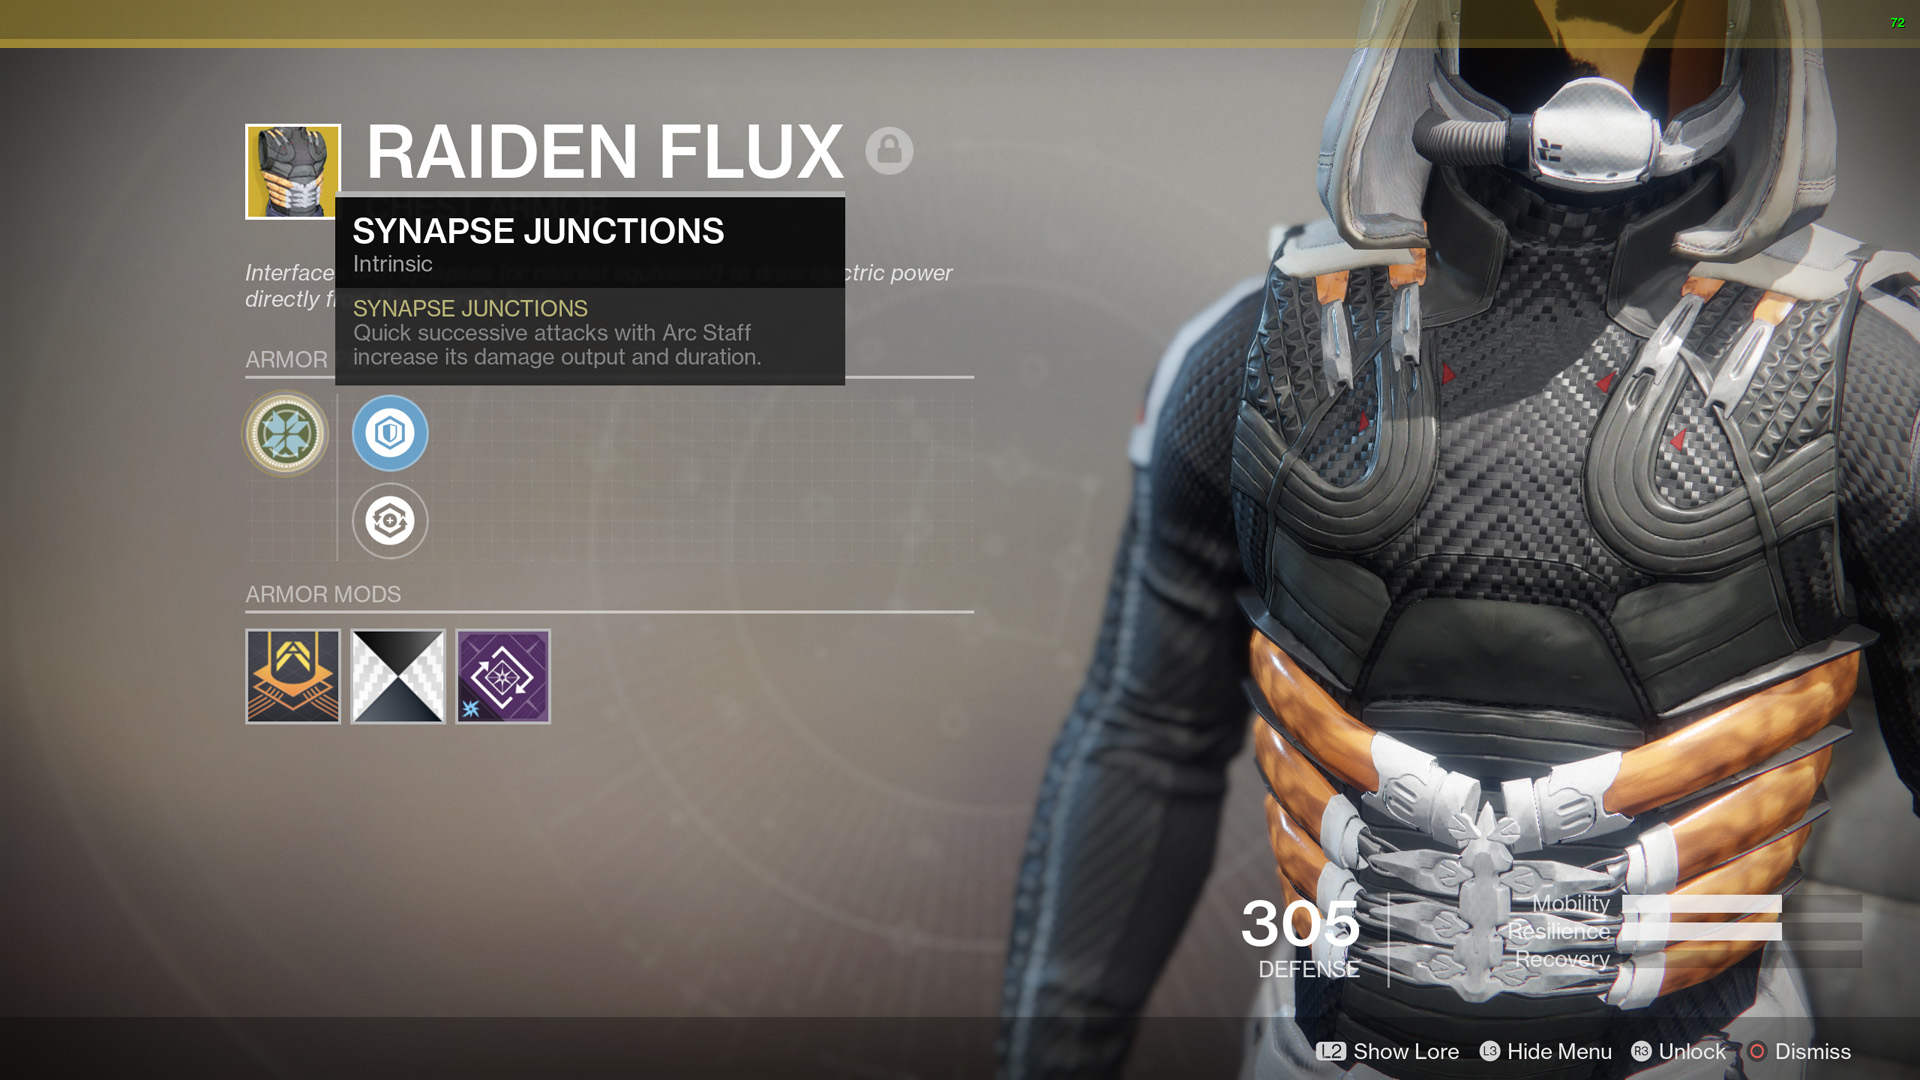 What does Raiden flux do?